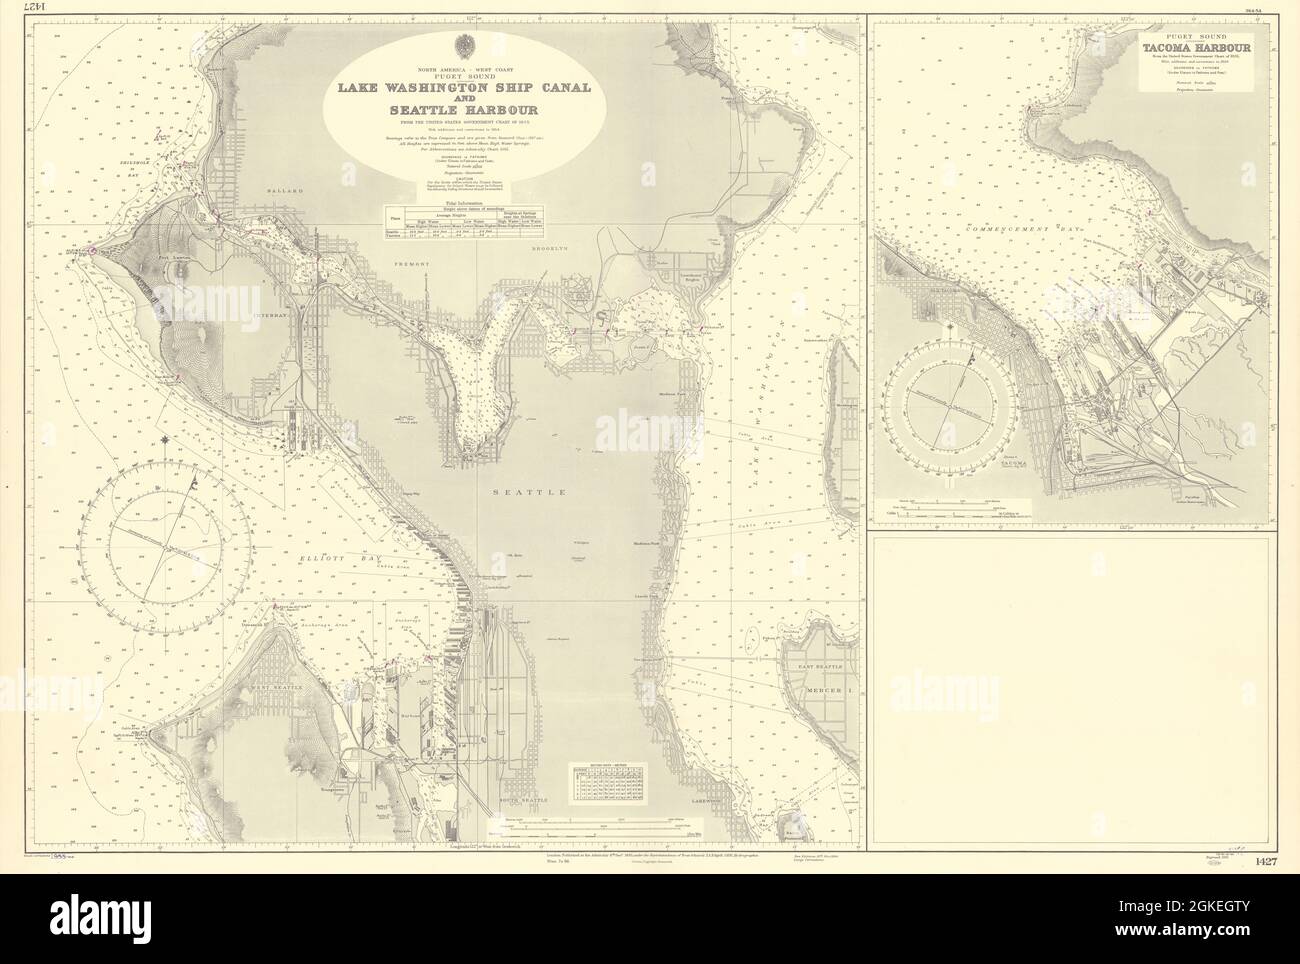 Seattle Tacoma Harbour Lake Washington Ship Canal ADMIRALTY Chart 1935 (1955) Karte Stockfoto